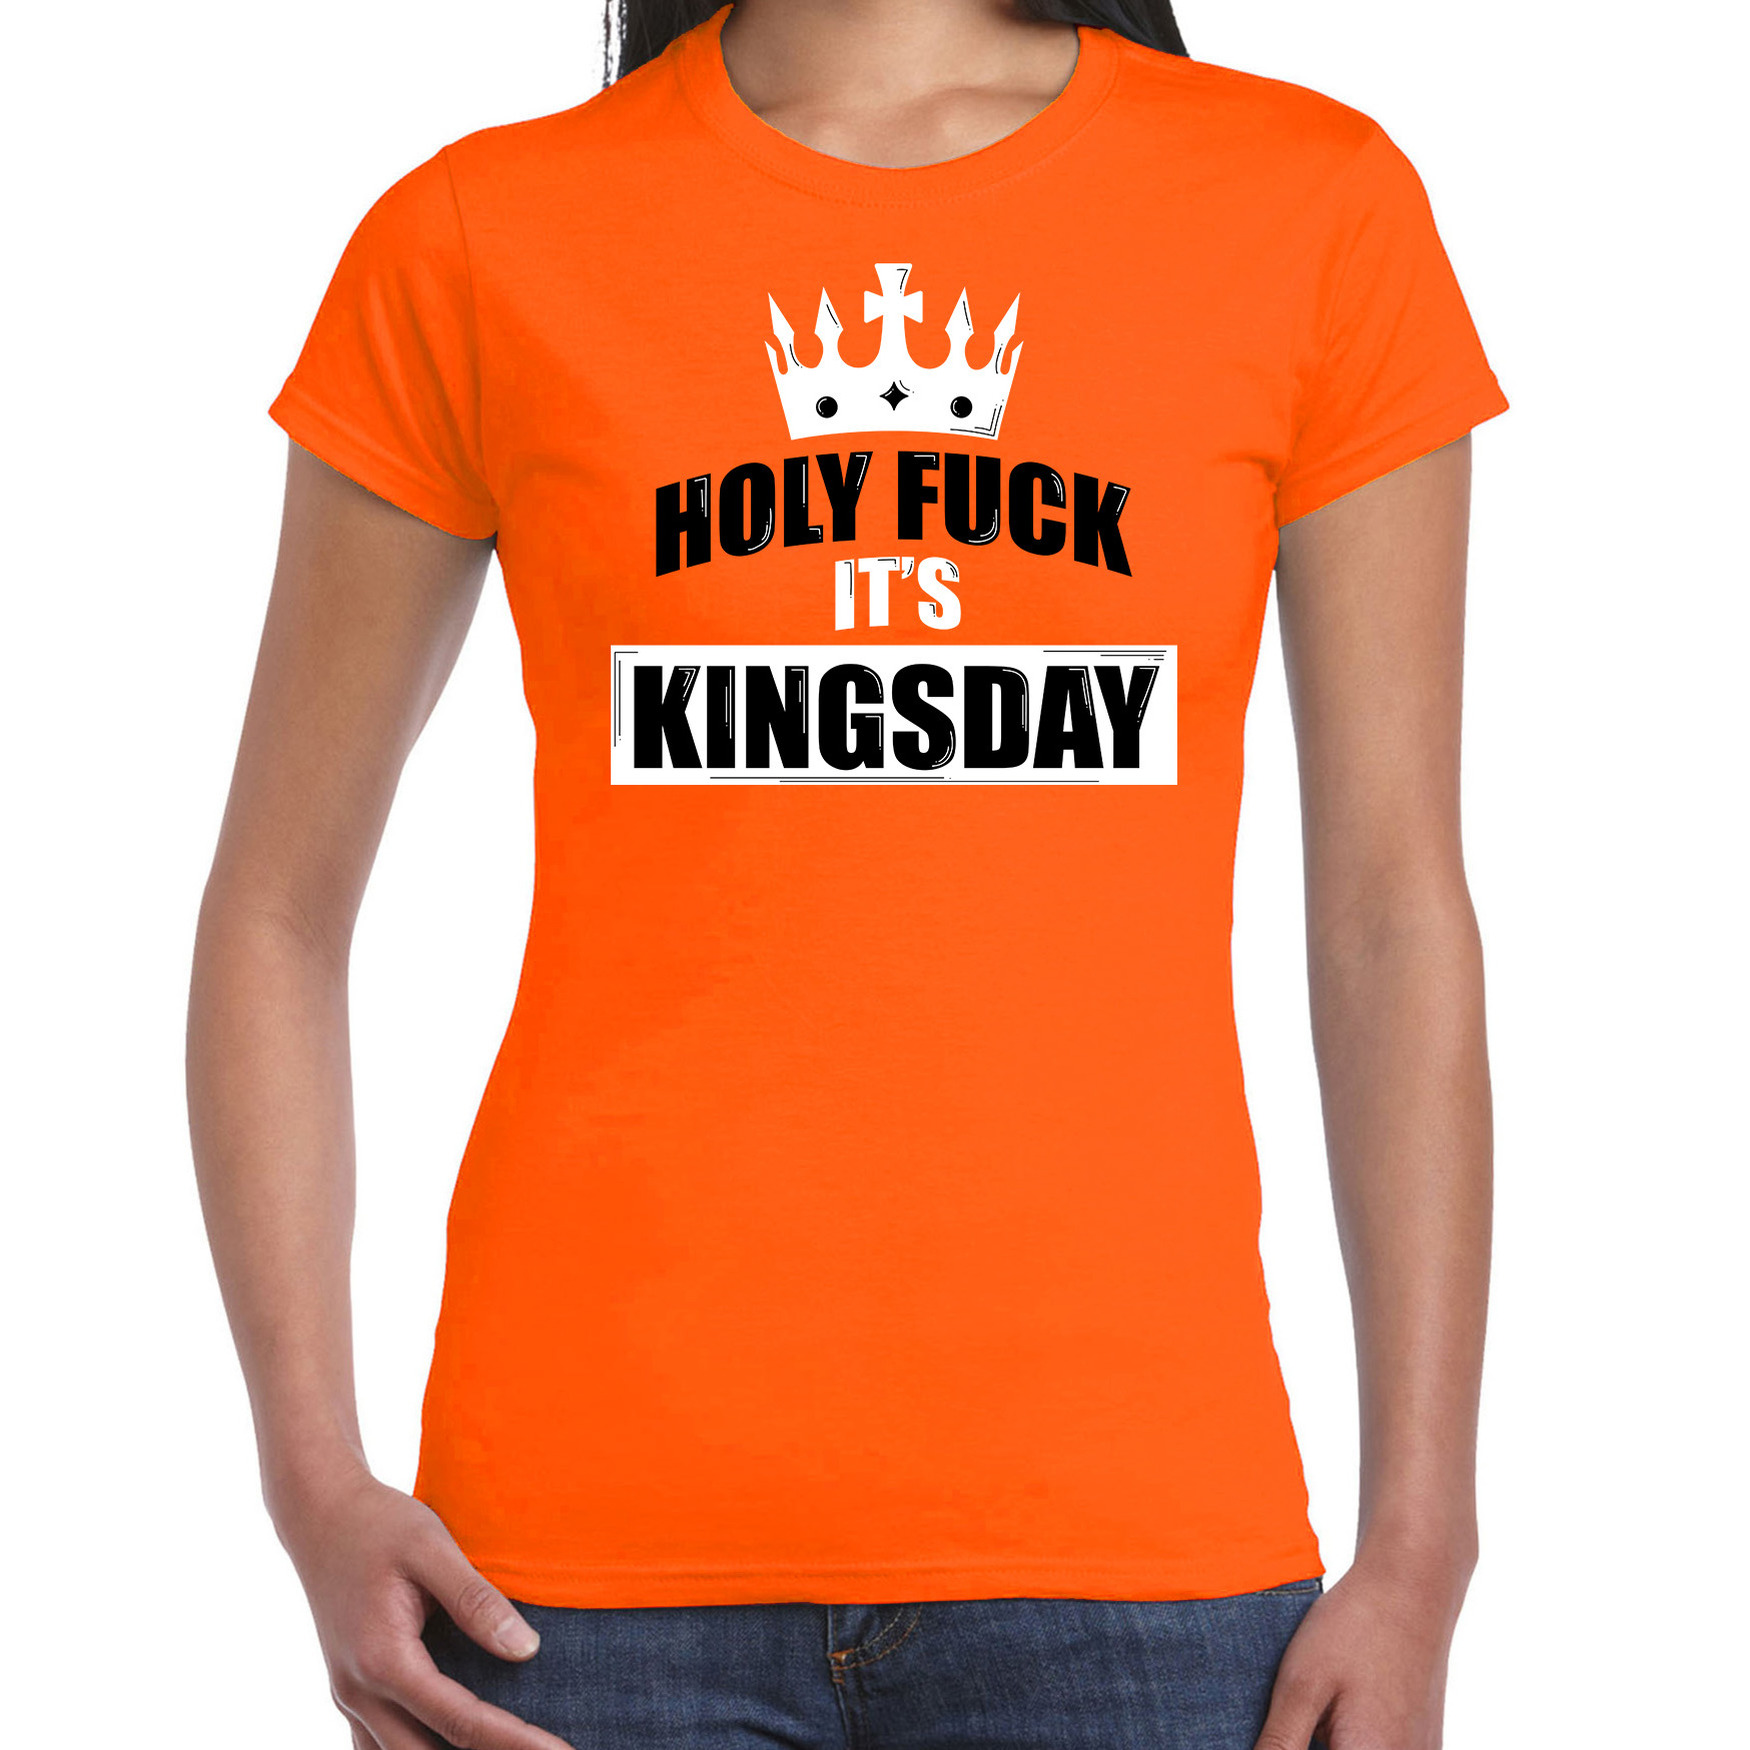 Holy fuck its Kingsday t-shirt oranje voor dames - Koningsdag shirts